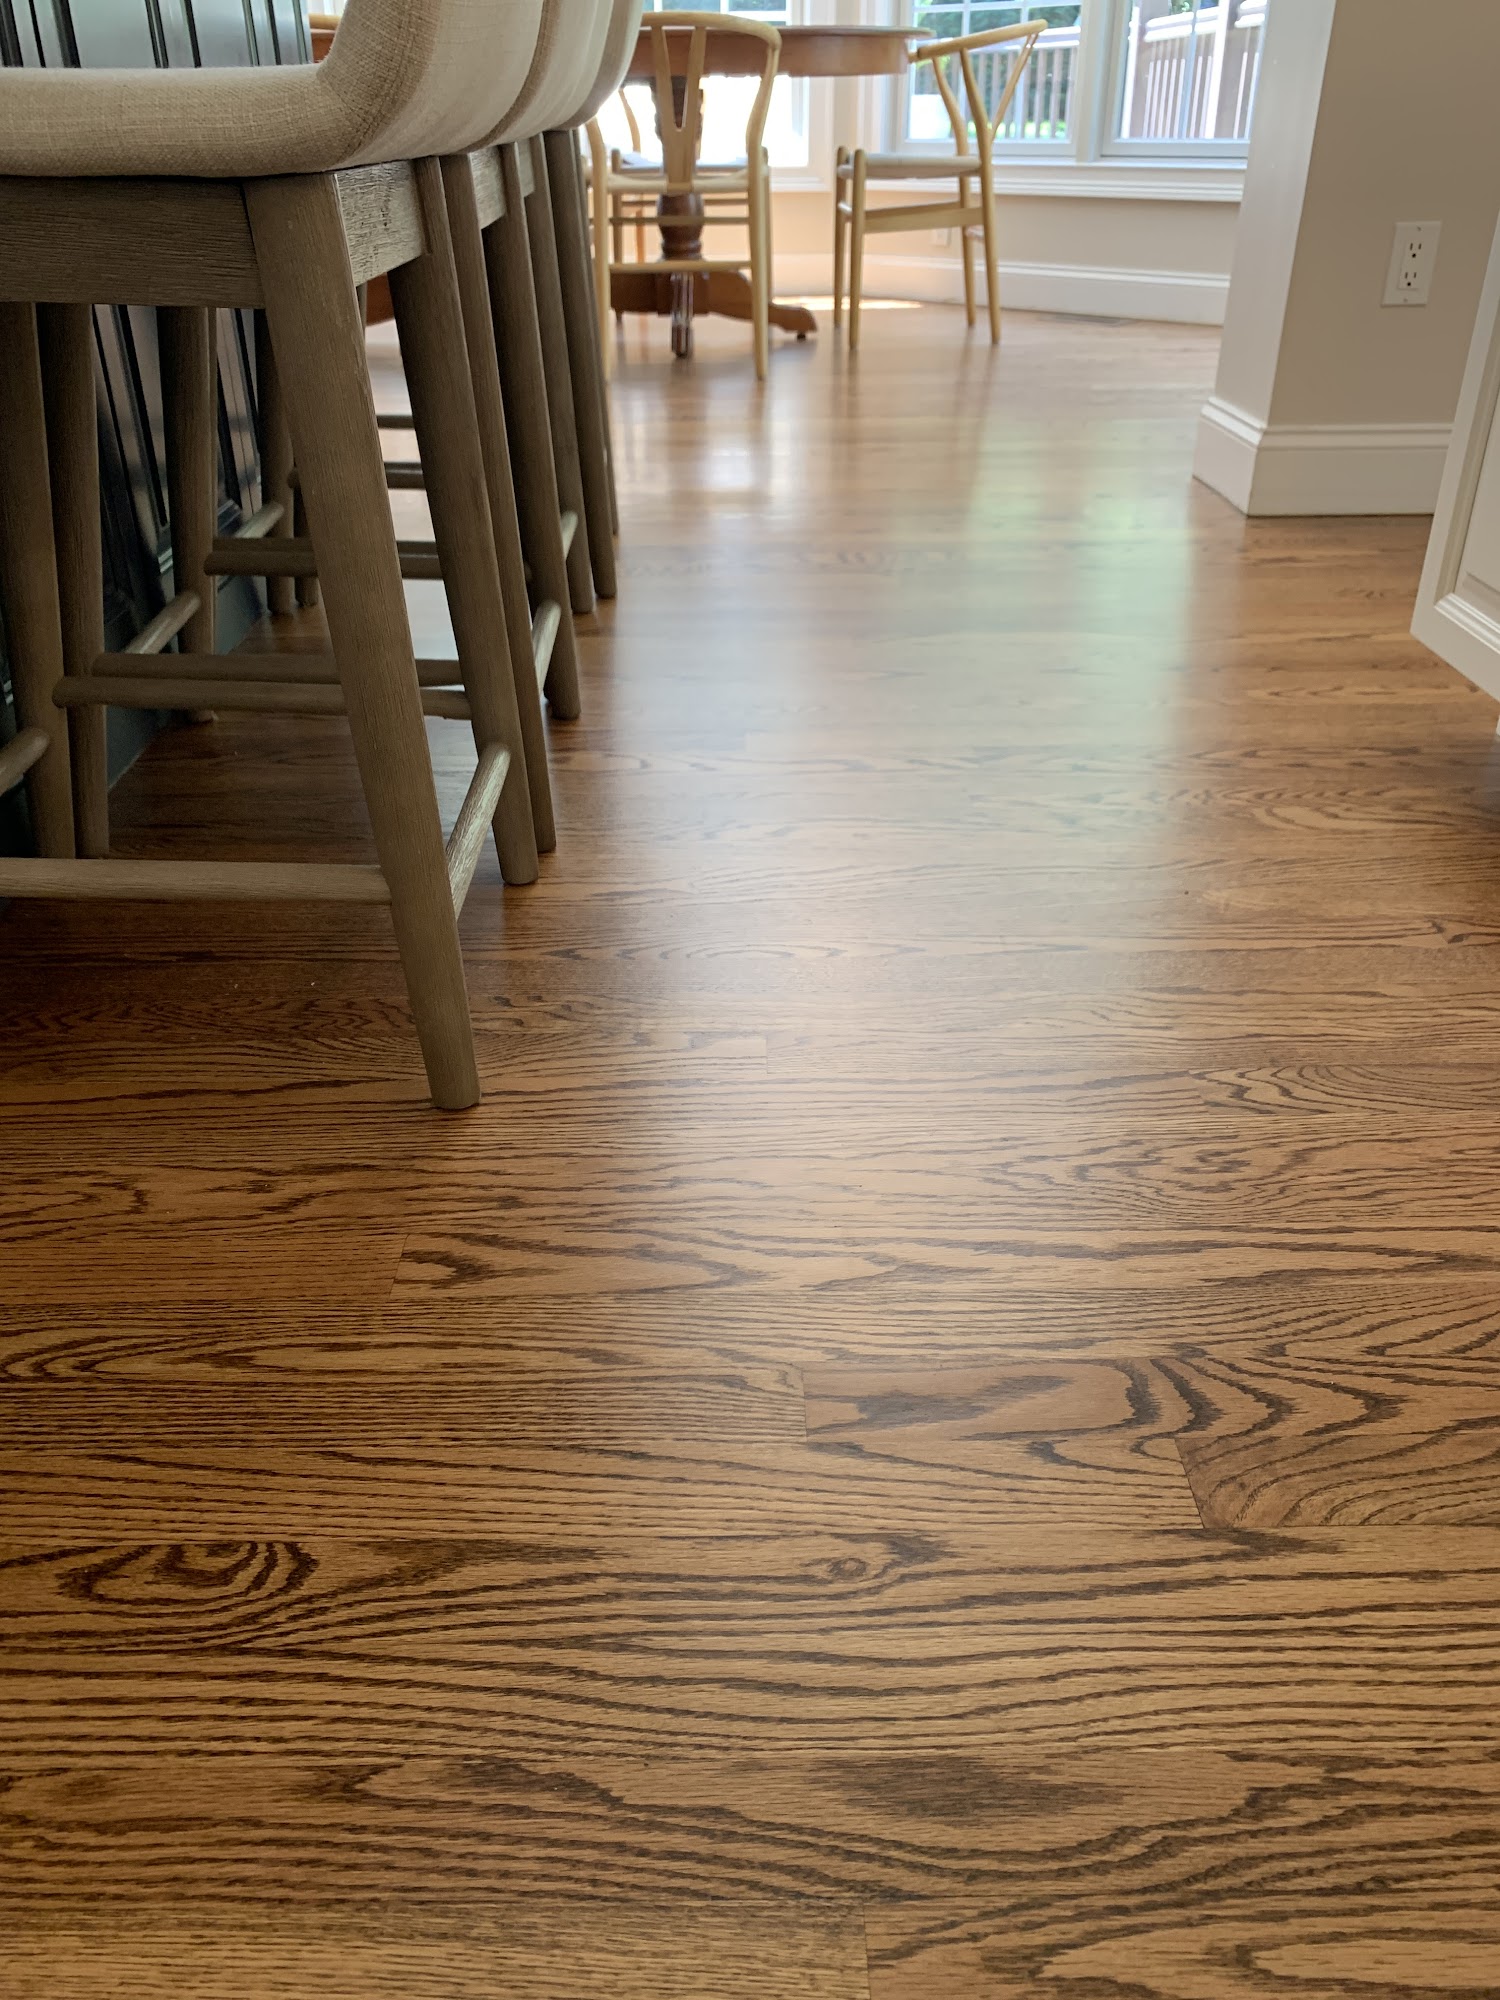 Precision Hardwood Flooring LLC